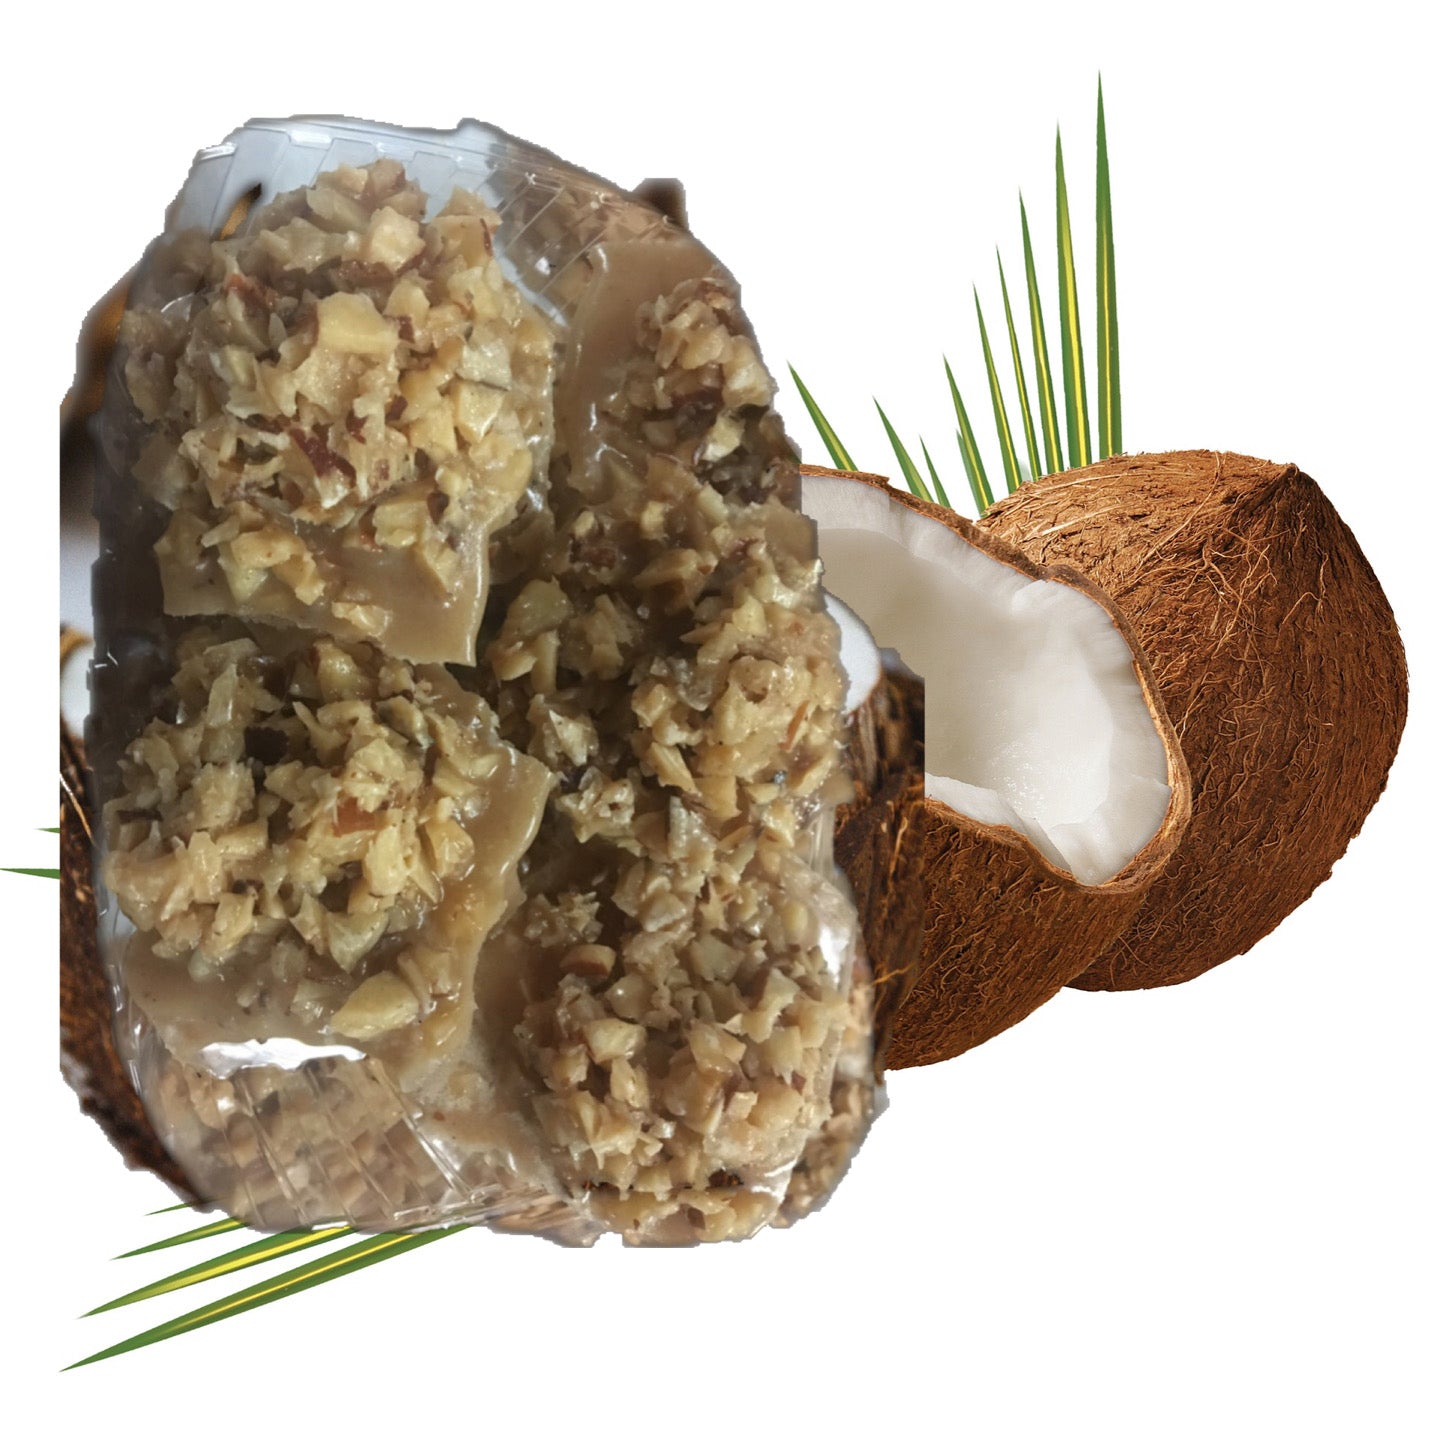 Turron de Coco (Coconut Nugget)